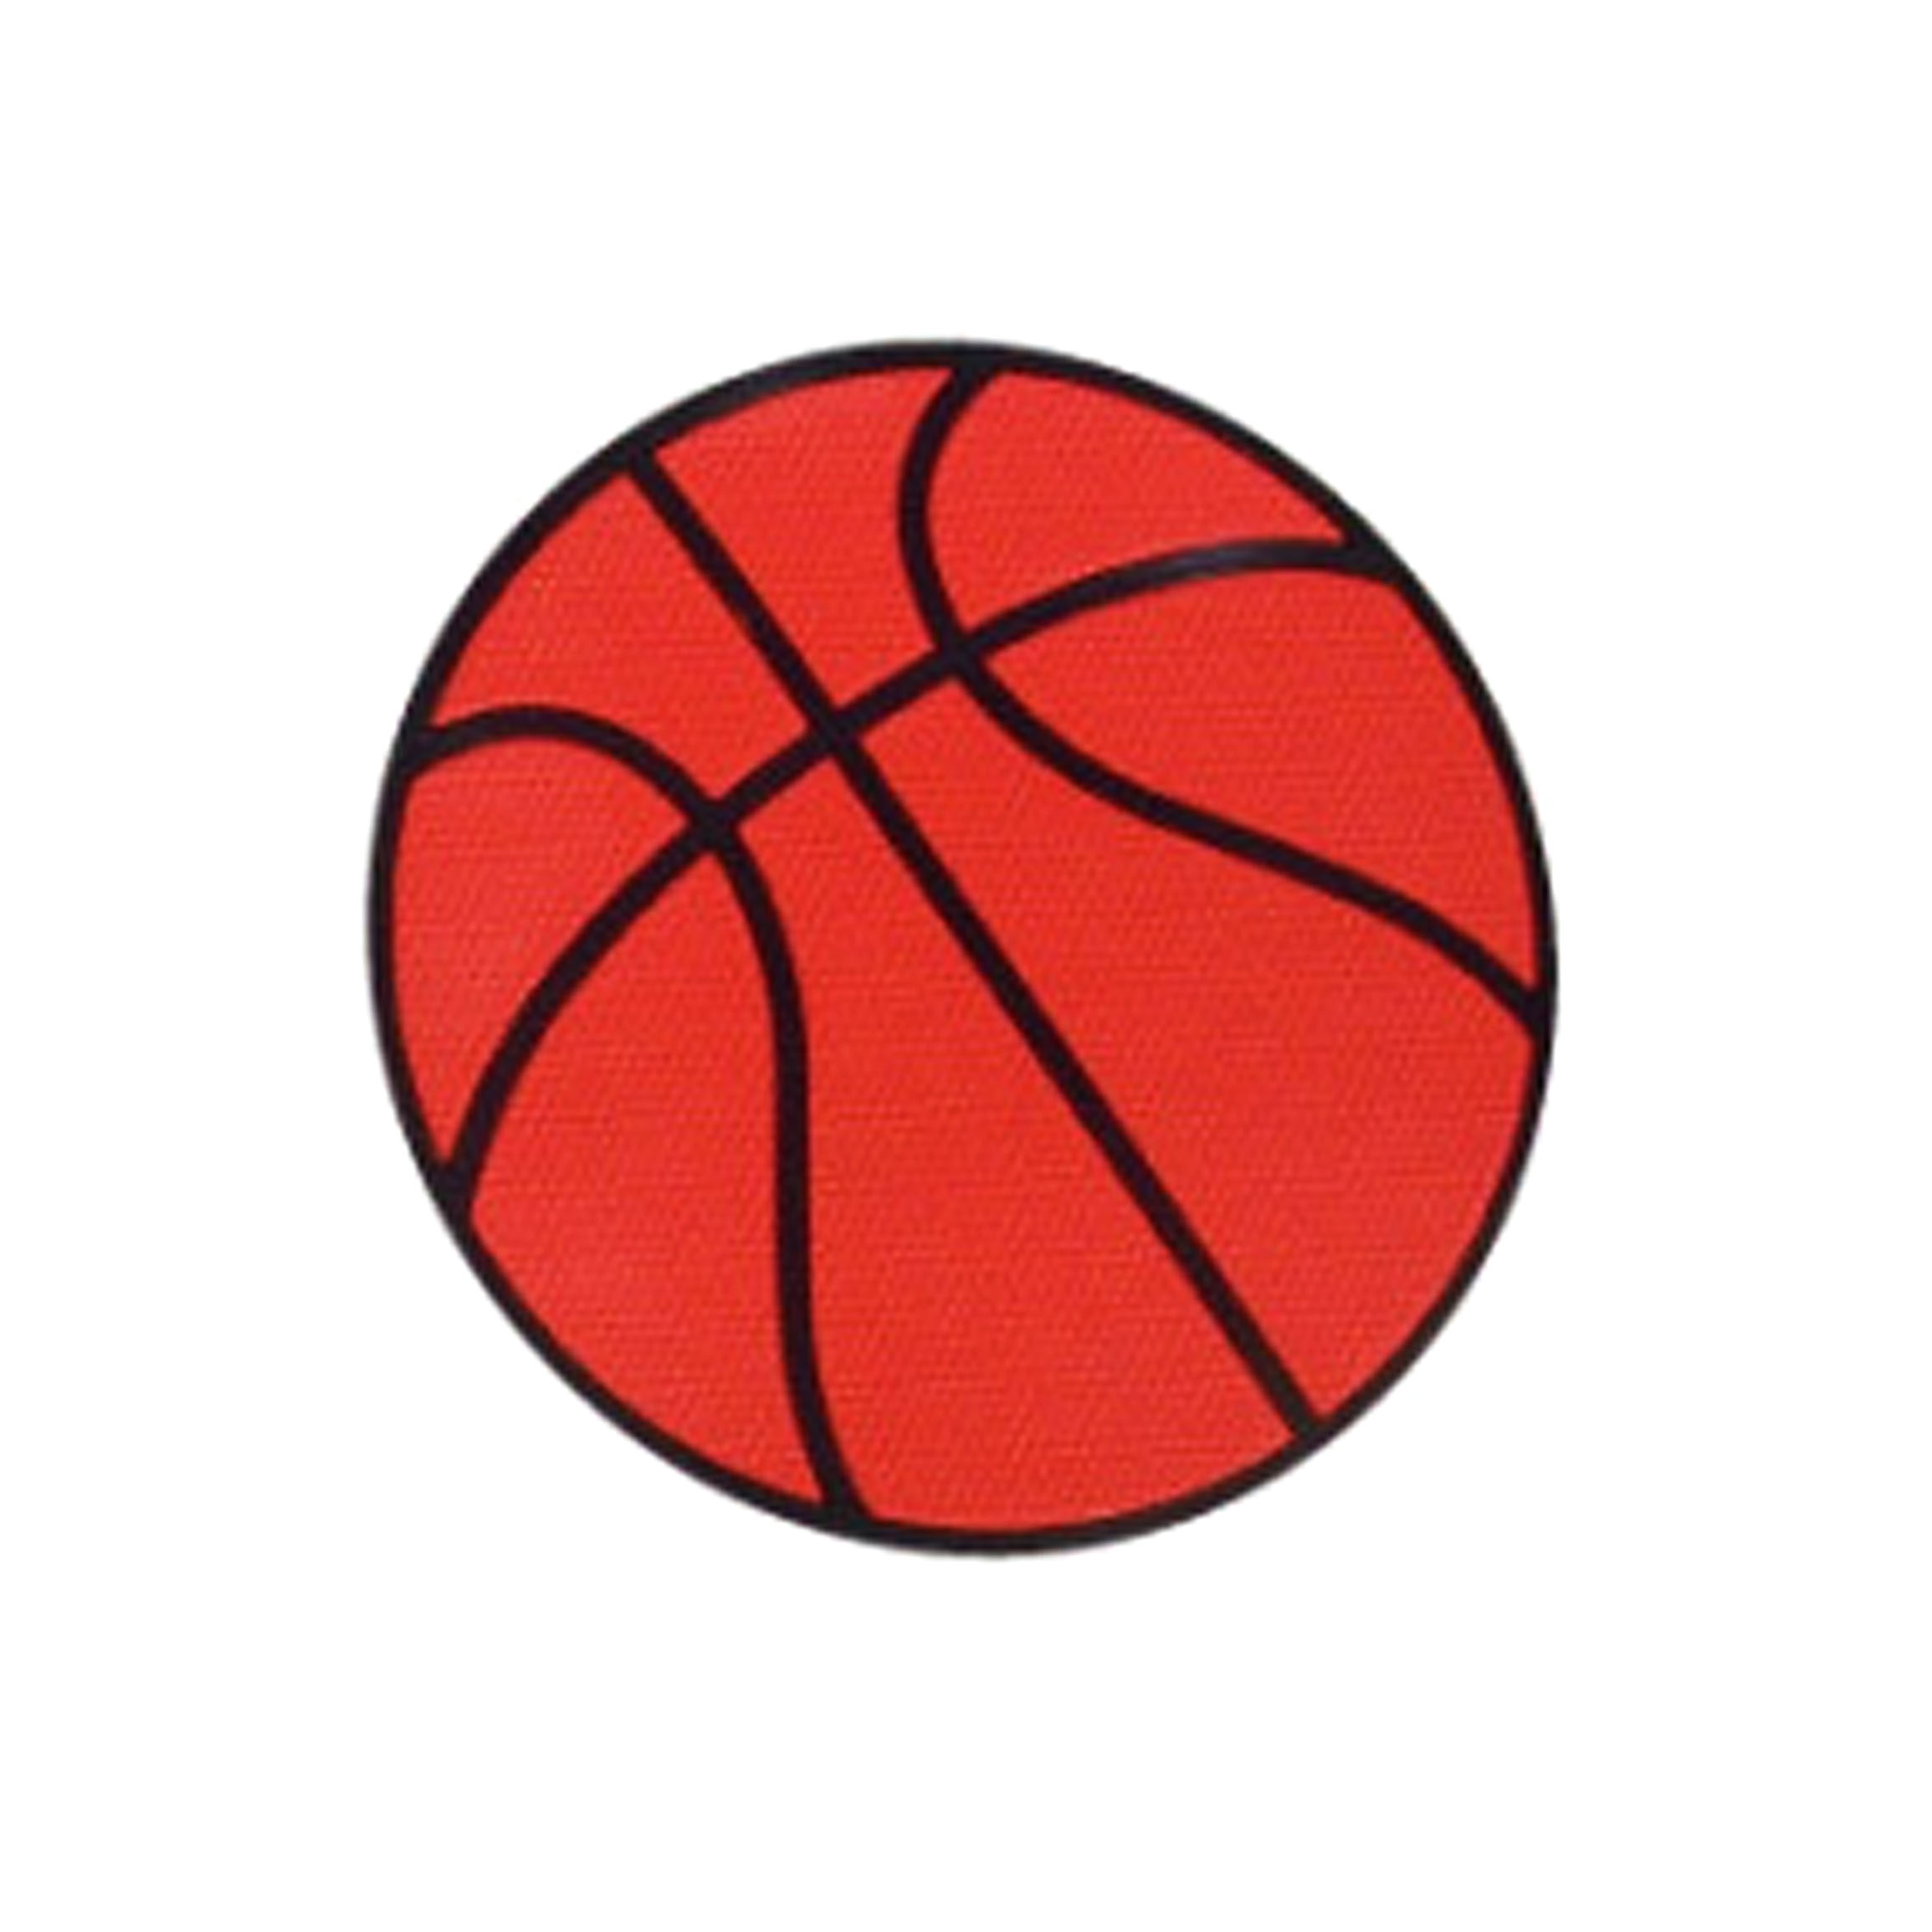 Poly Basketballs – 12 Pack